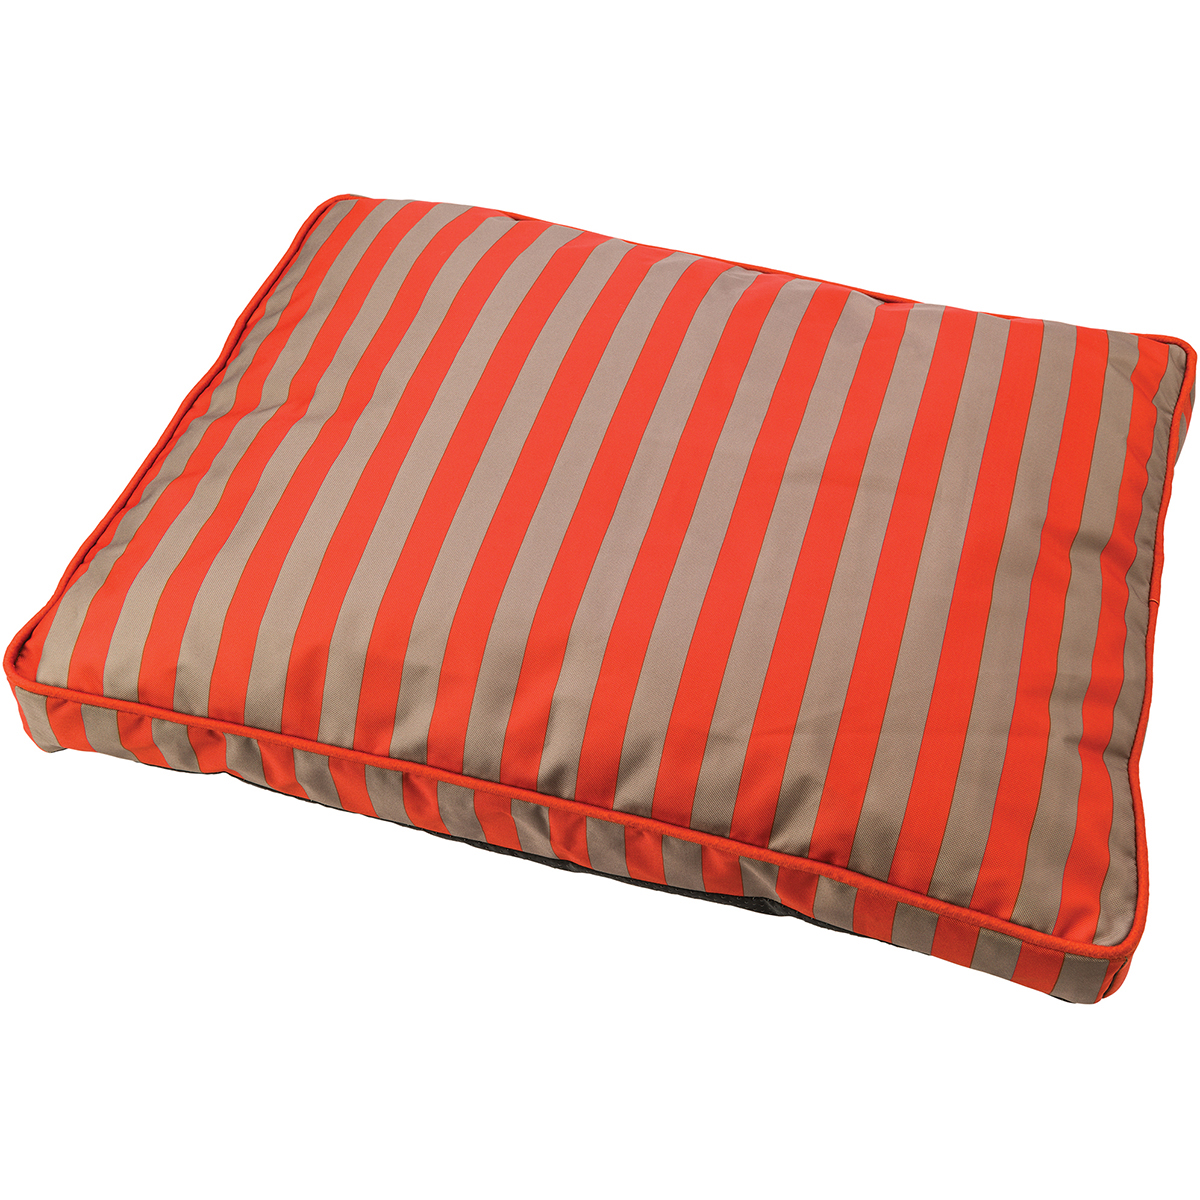 32900 29 In. Sleep Zone Cabana Pillow Bed, Orange